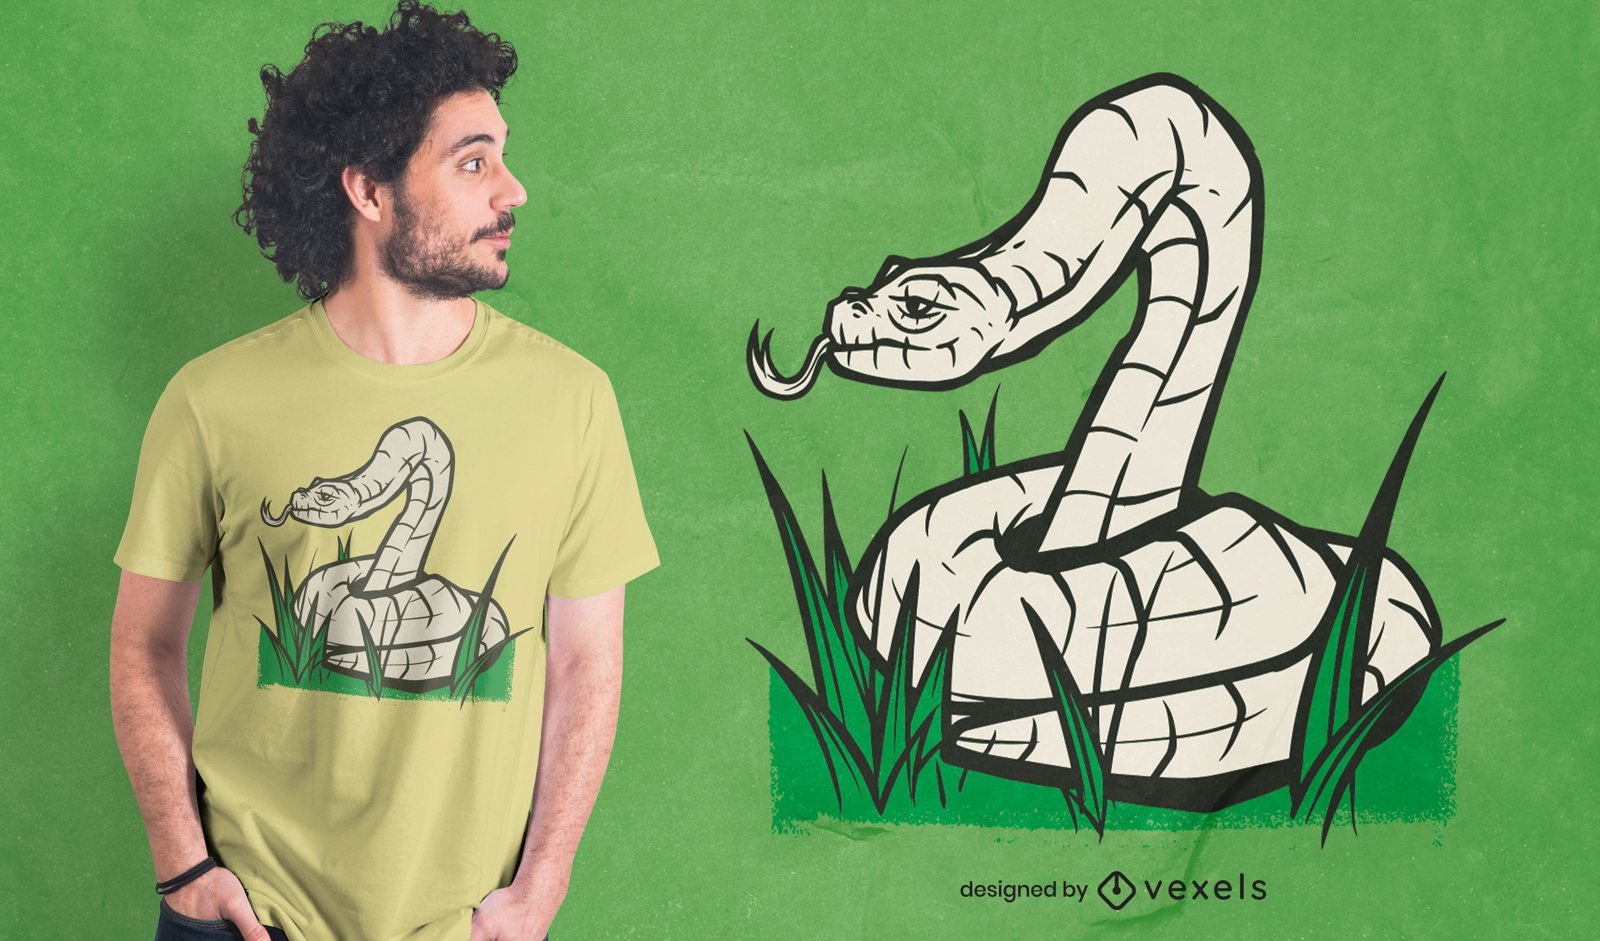 Coiled up snake t-shirt design